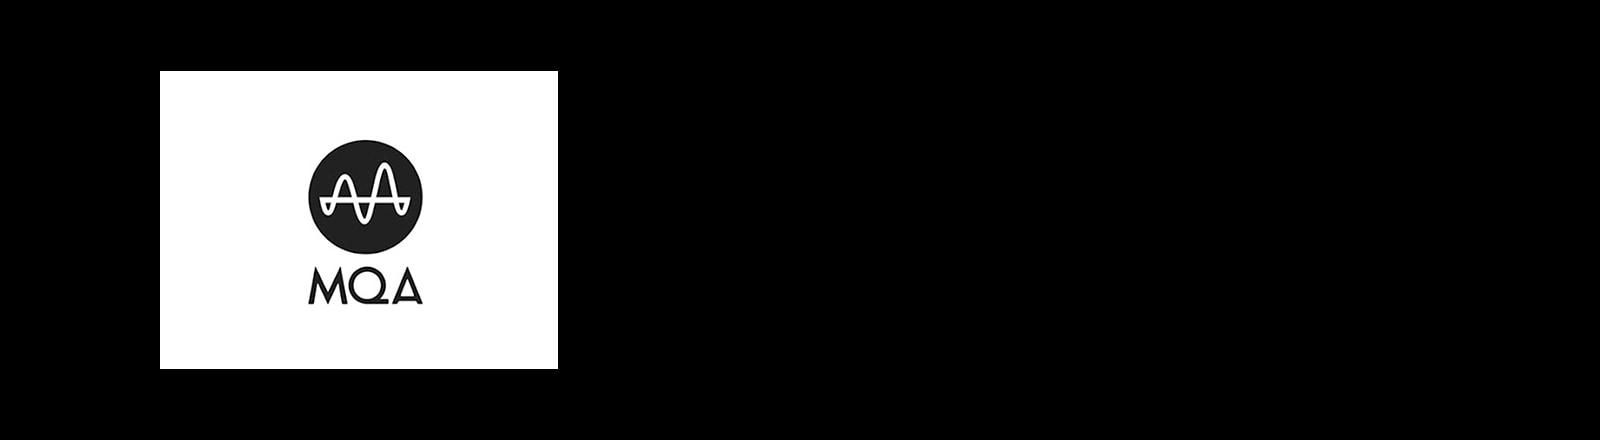 Изображение логотипа MQA